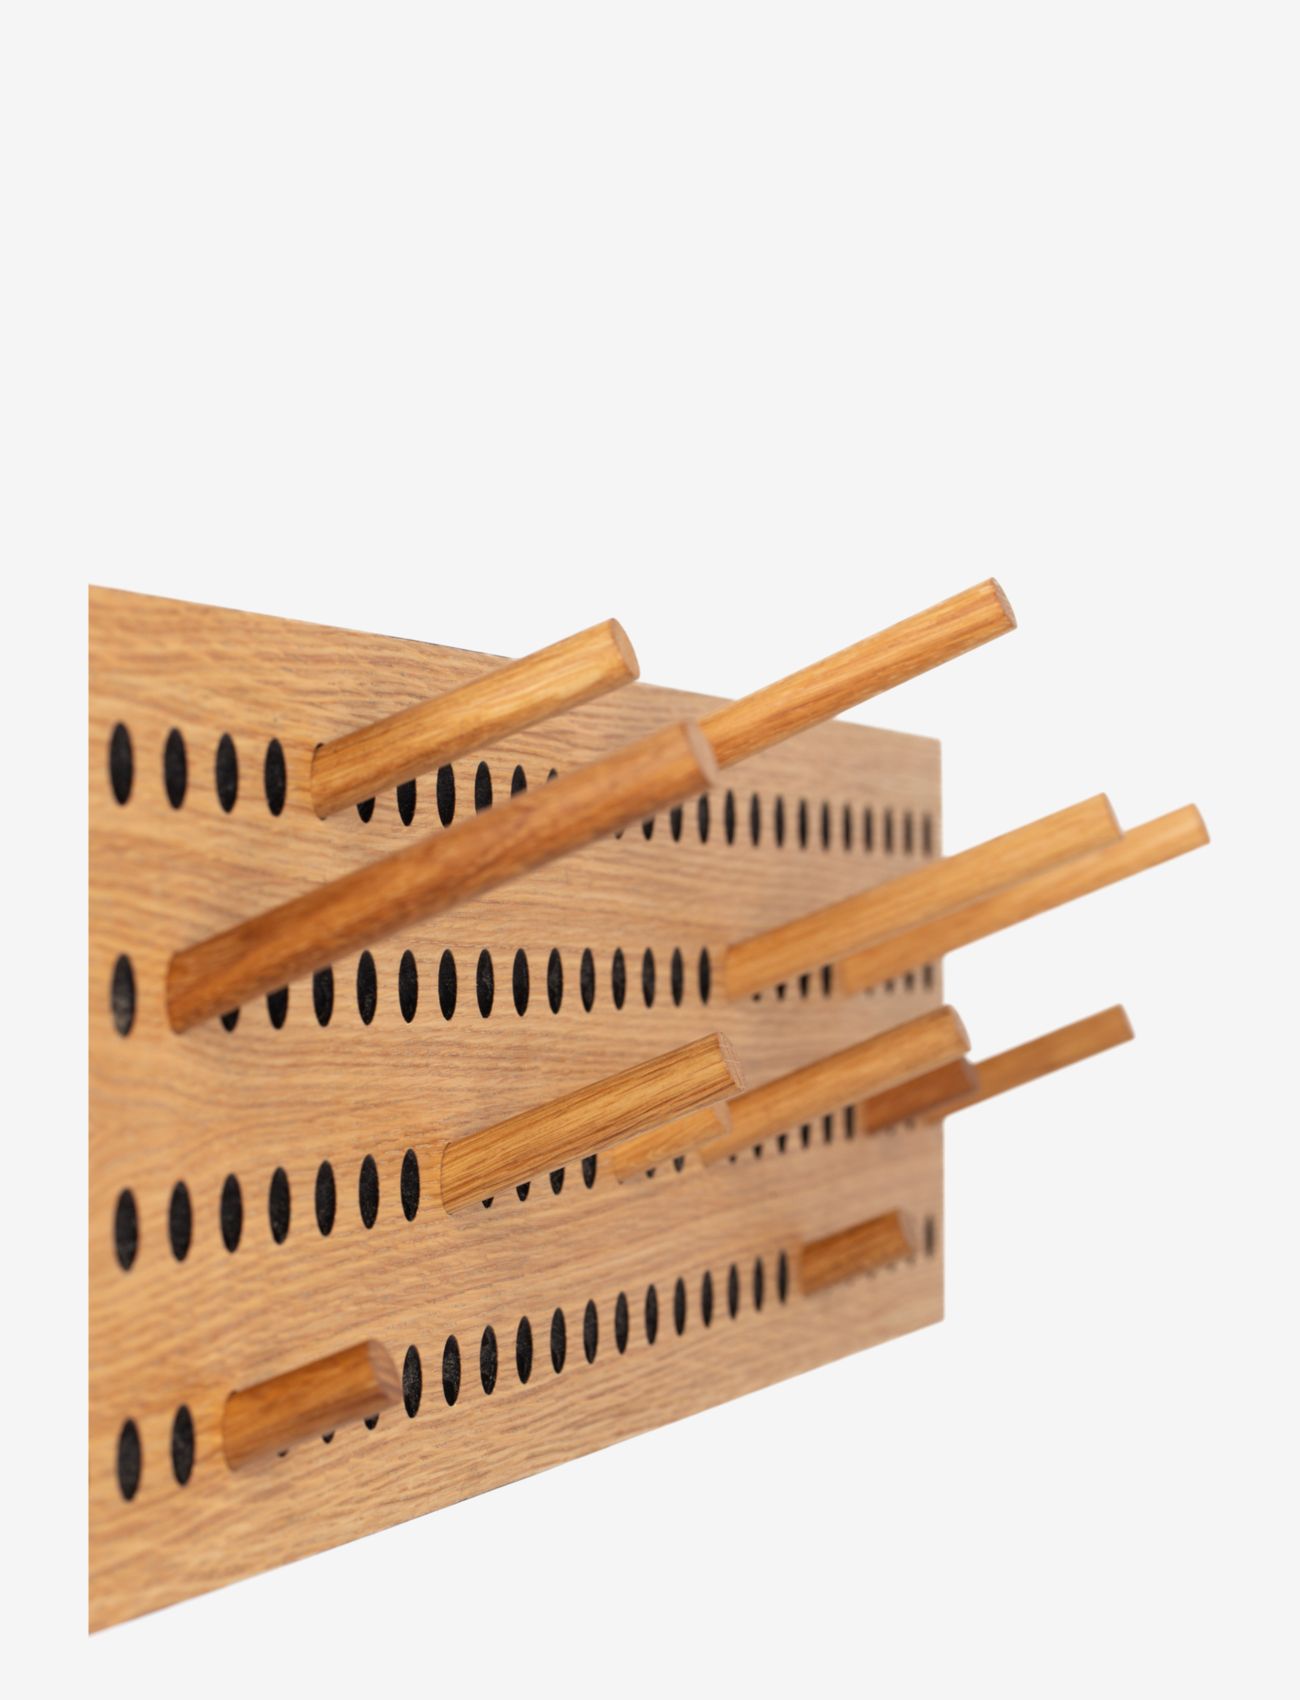 We Do Wood - Scoreboard Large, Horizontal - fsc oak veneer, dots with upcycled plastic - 1